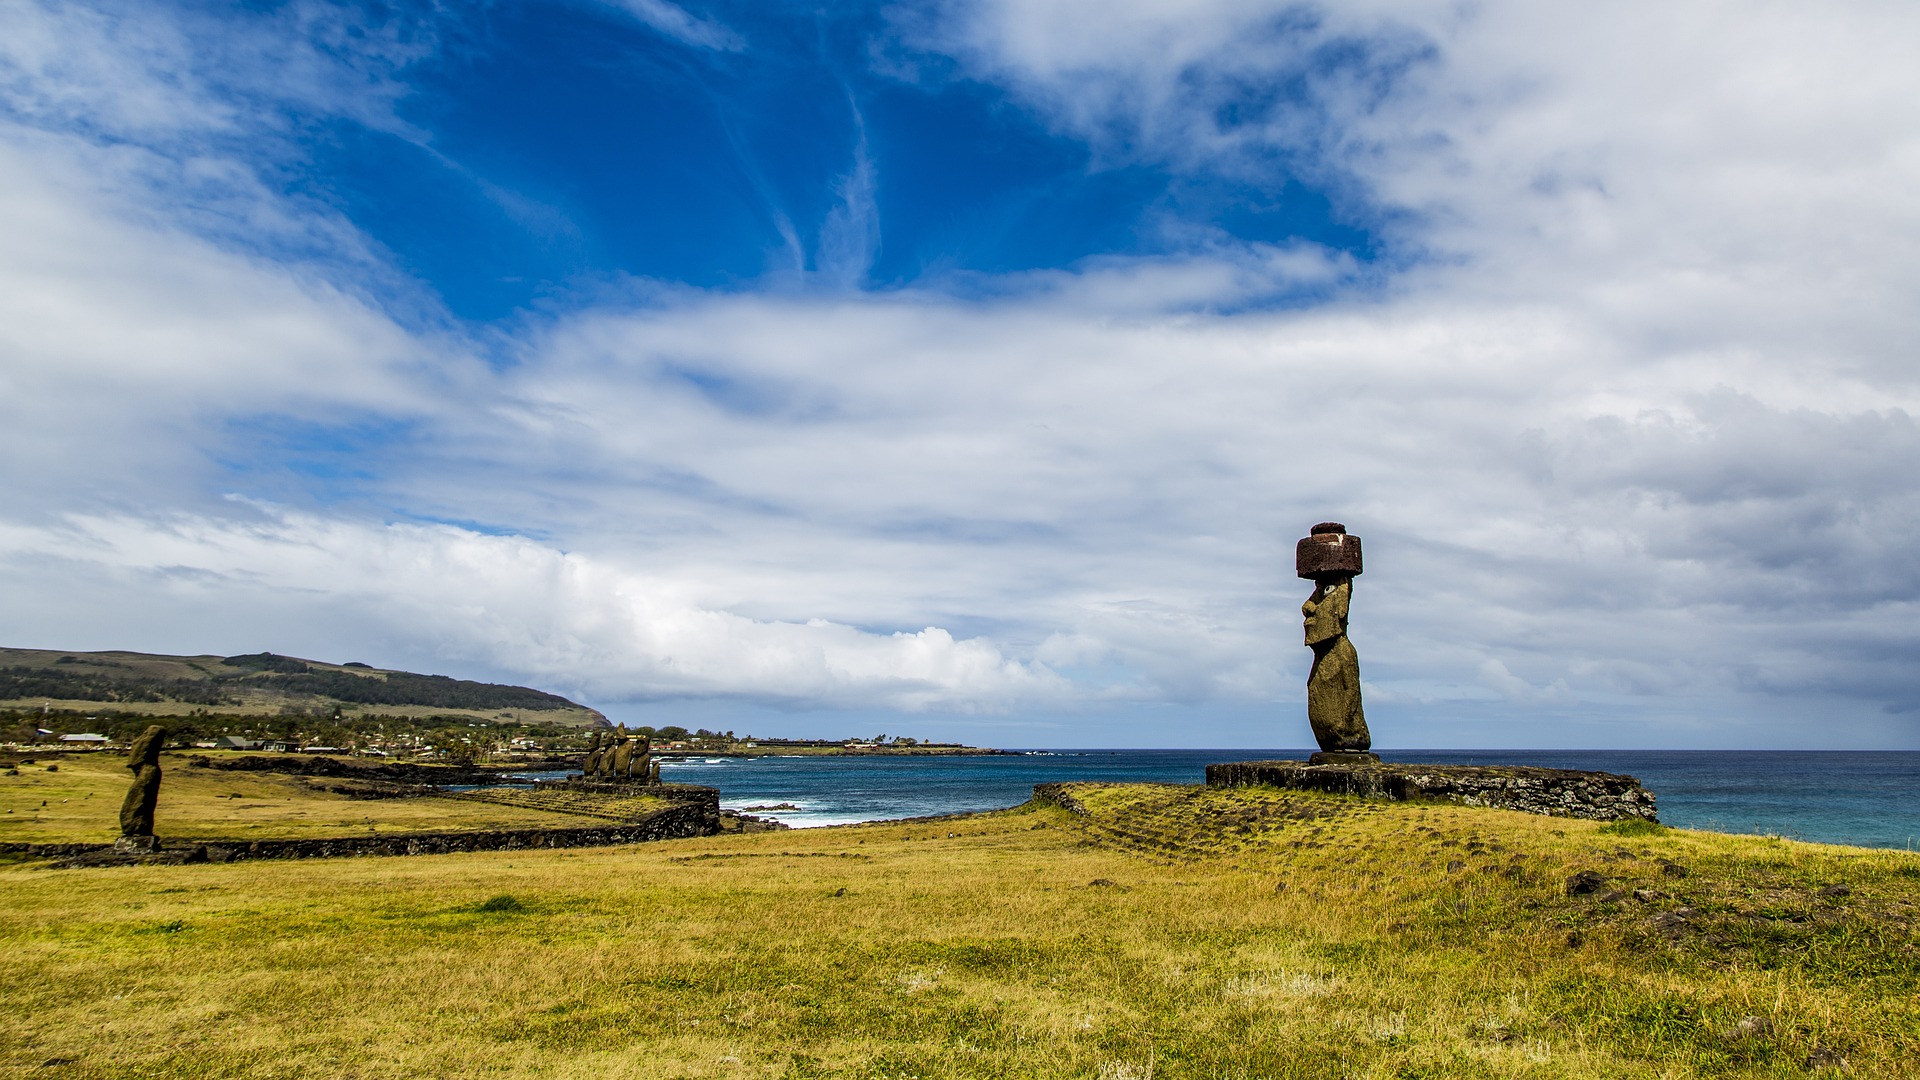 Easter Island - a new moai discovered